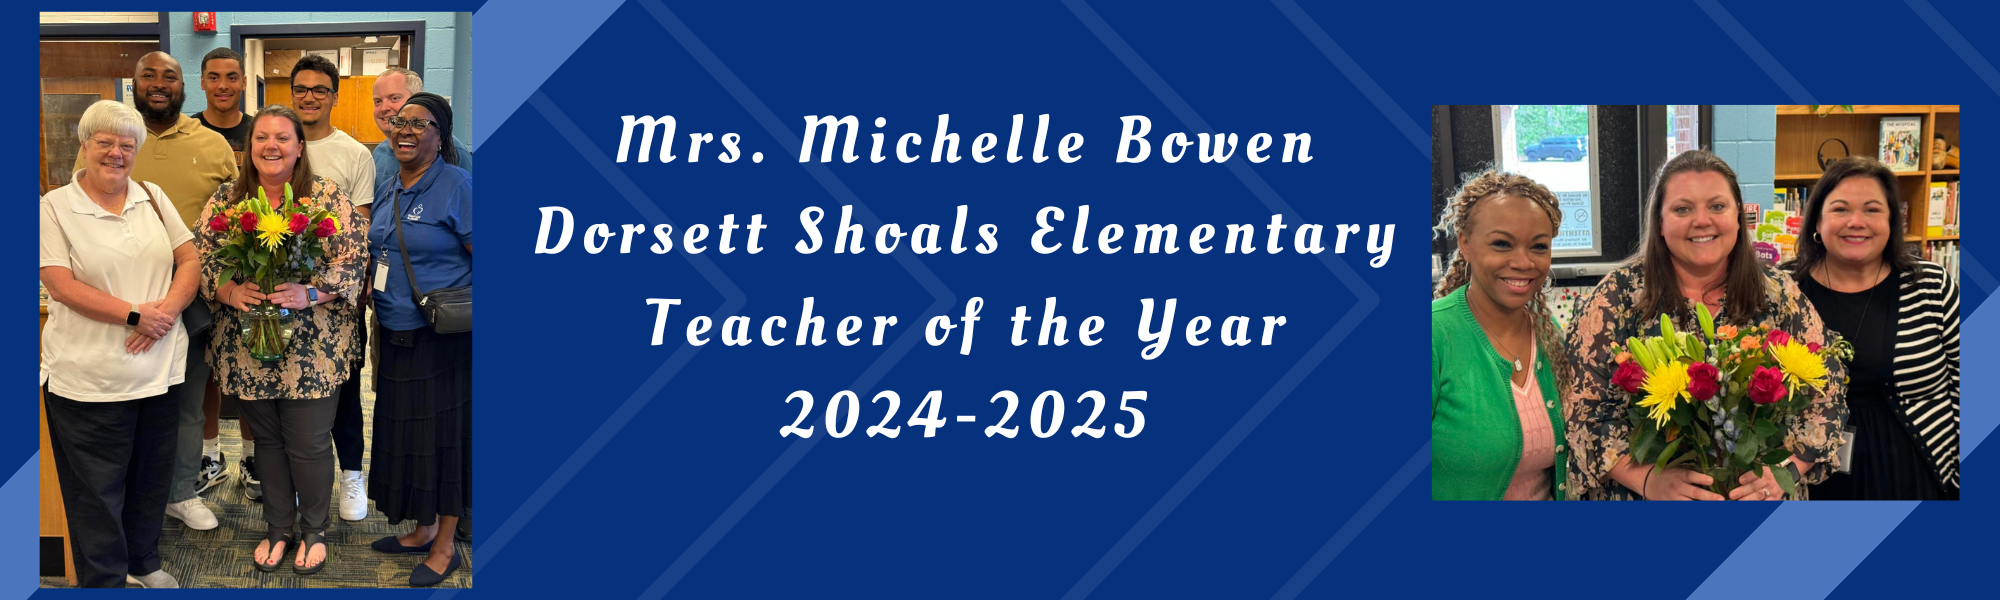 Michelle Bowen Teacher of the Year 